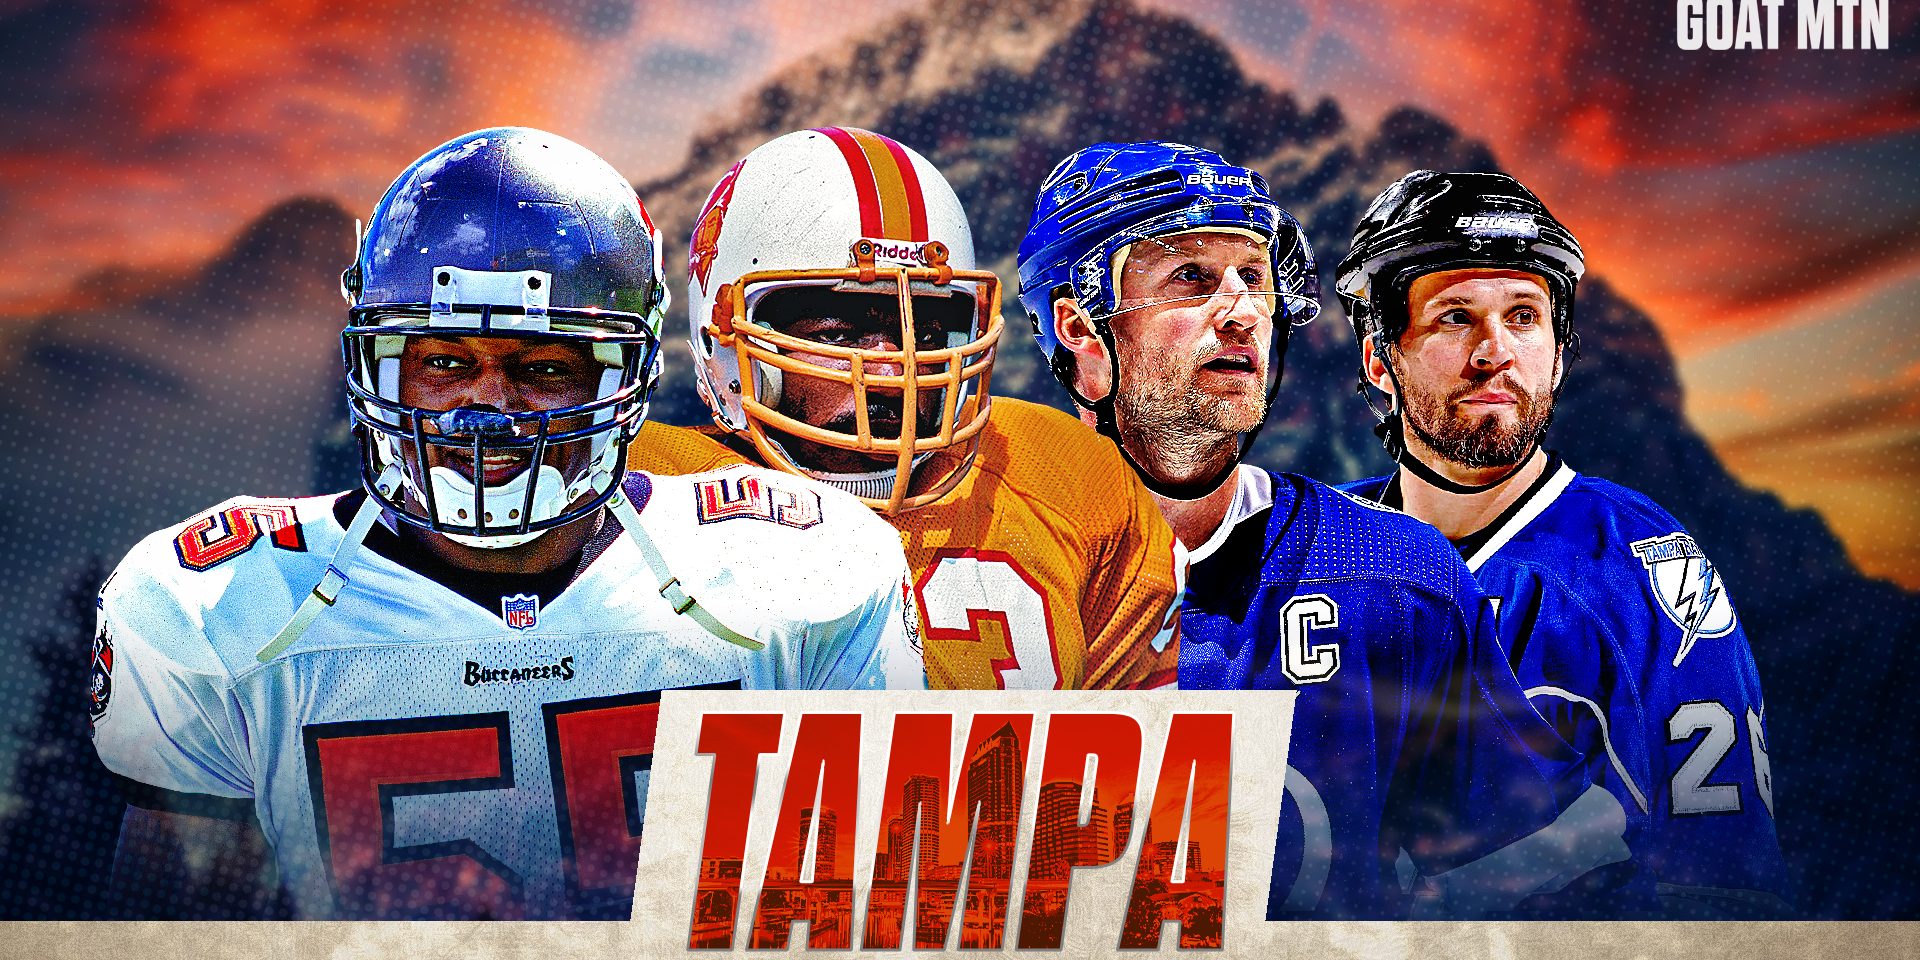 Tampa's GOAT Mountain of sports: Lee Roy Selmon, Derrick Brooks, Steven Samkos, Martin St. Louis voted best of the best